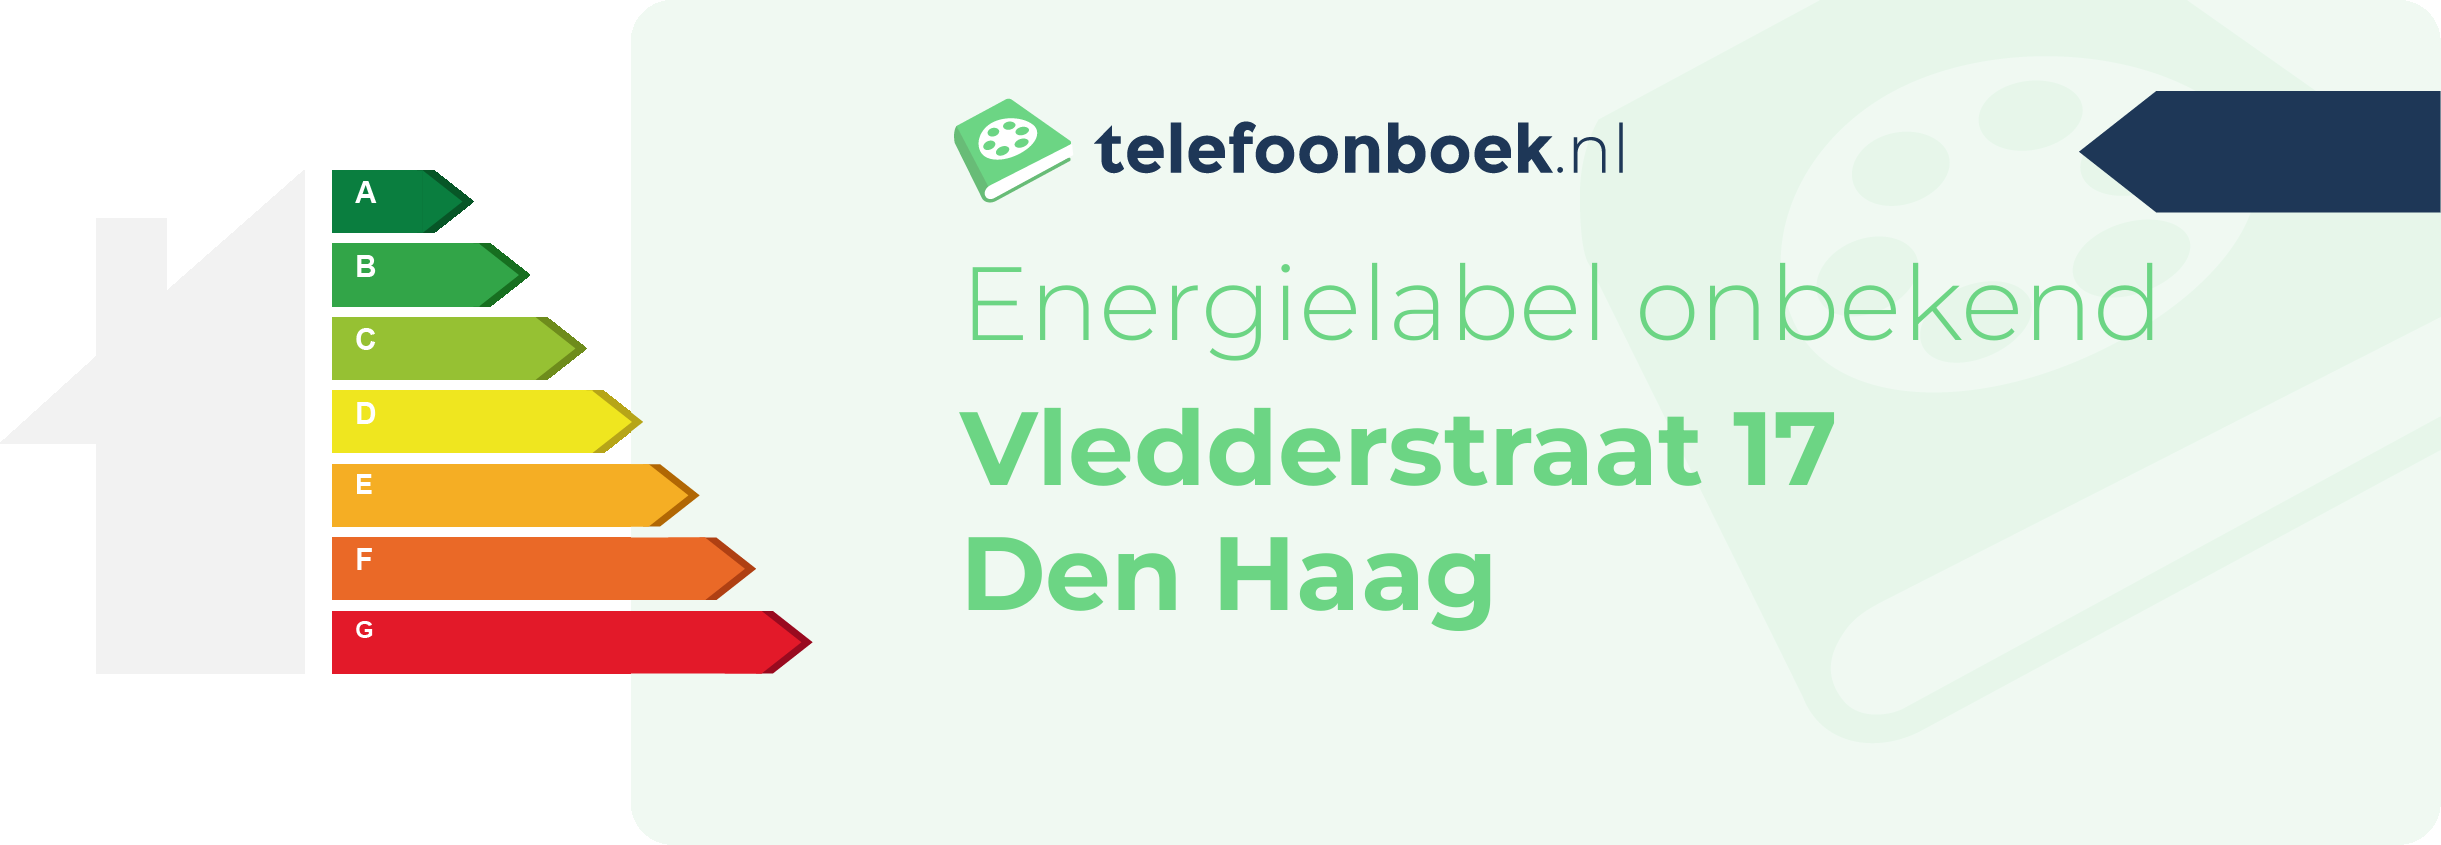 Energielabel Vledderstraat 17 Den Haag